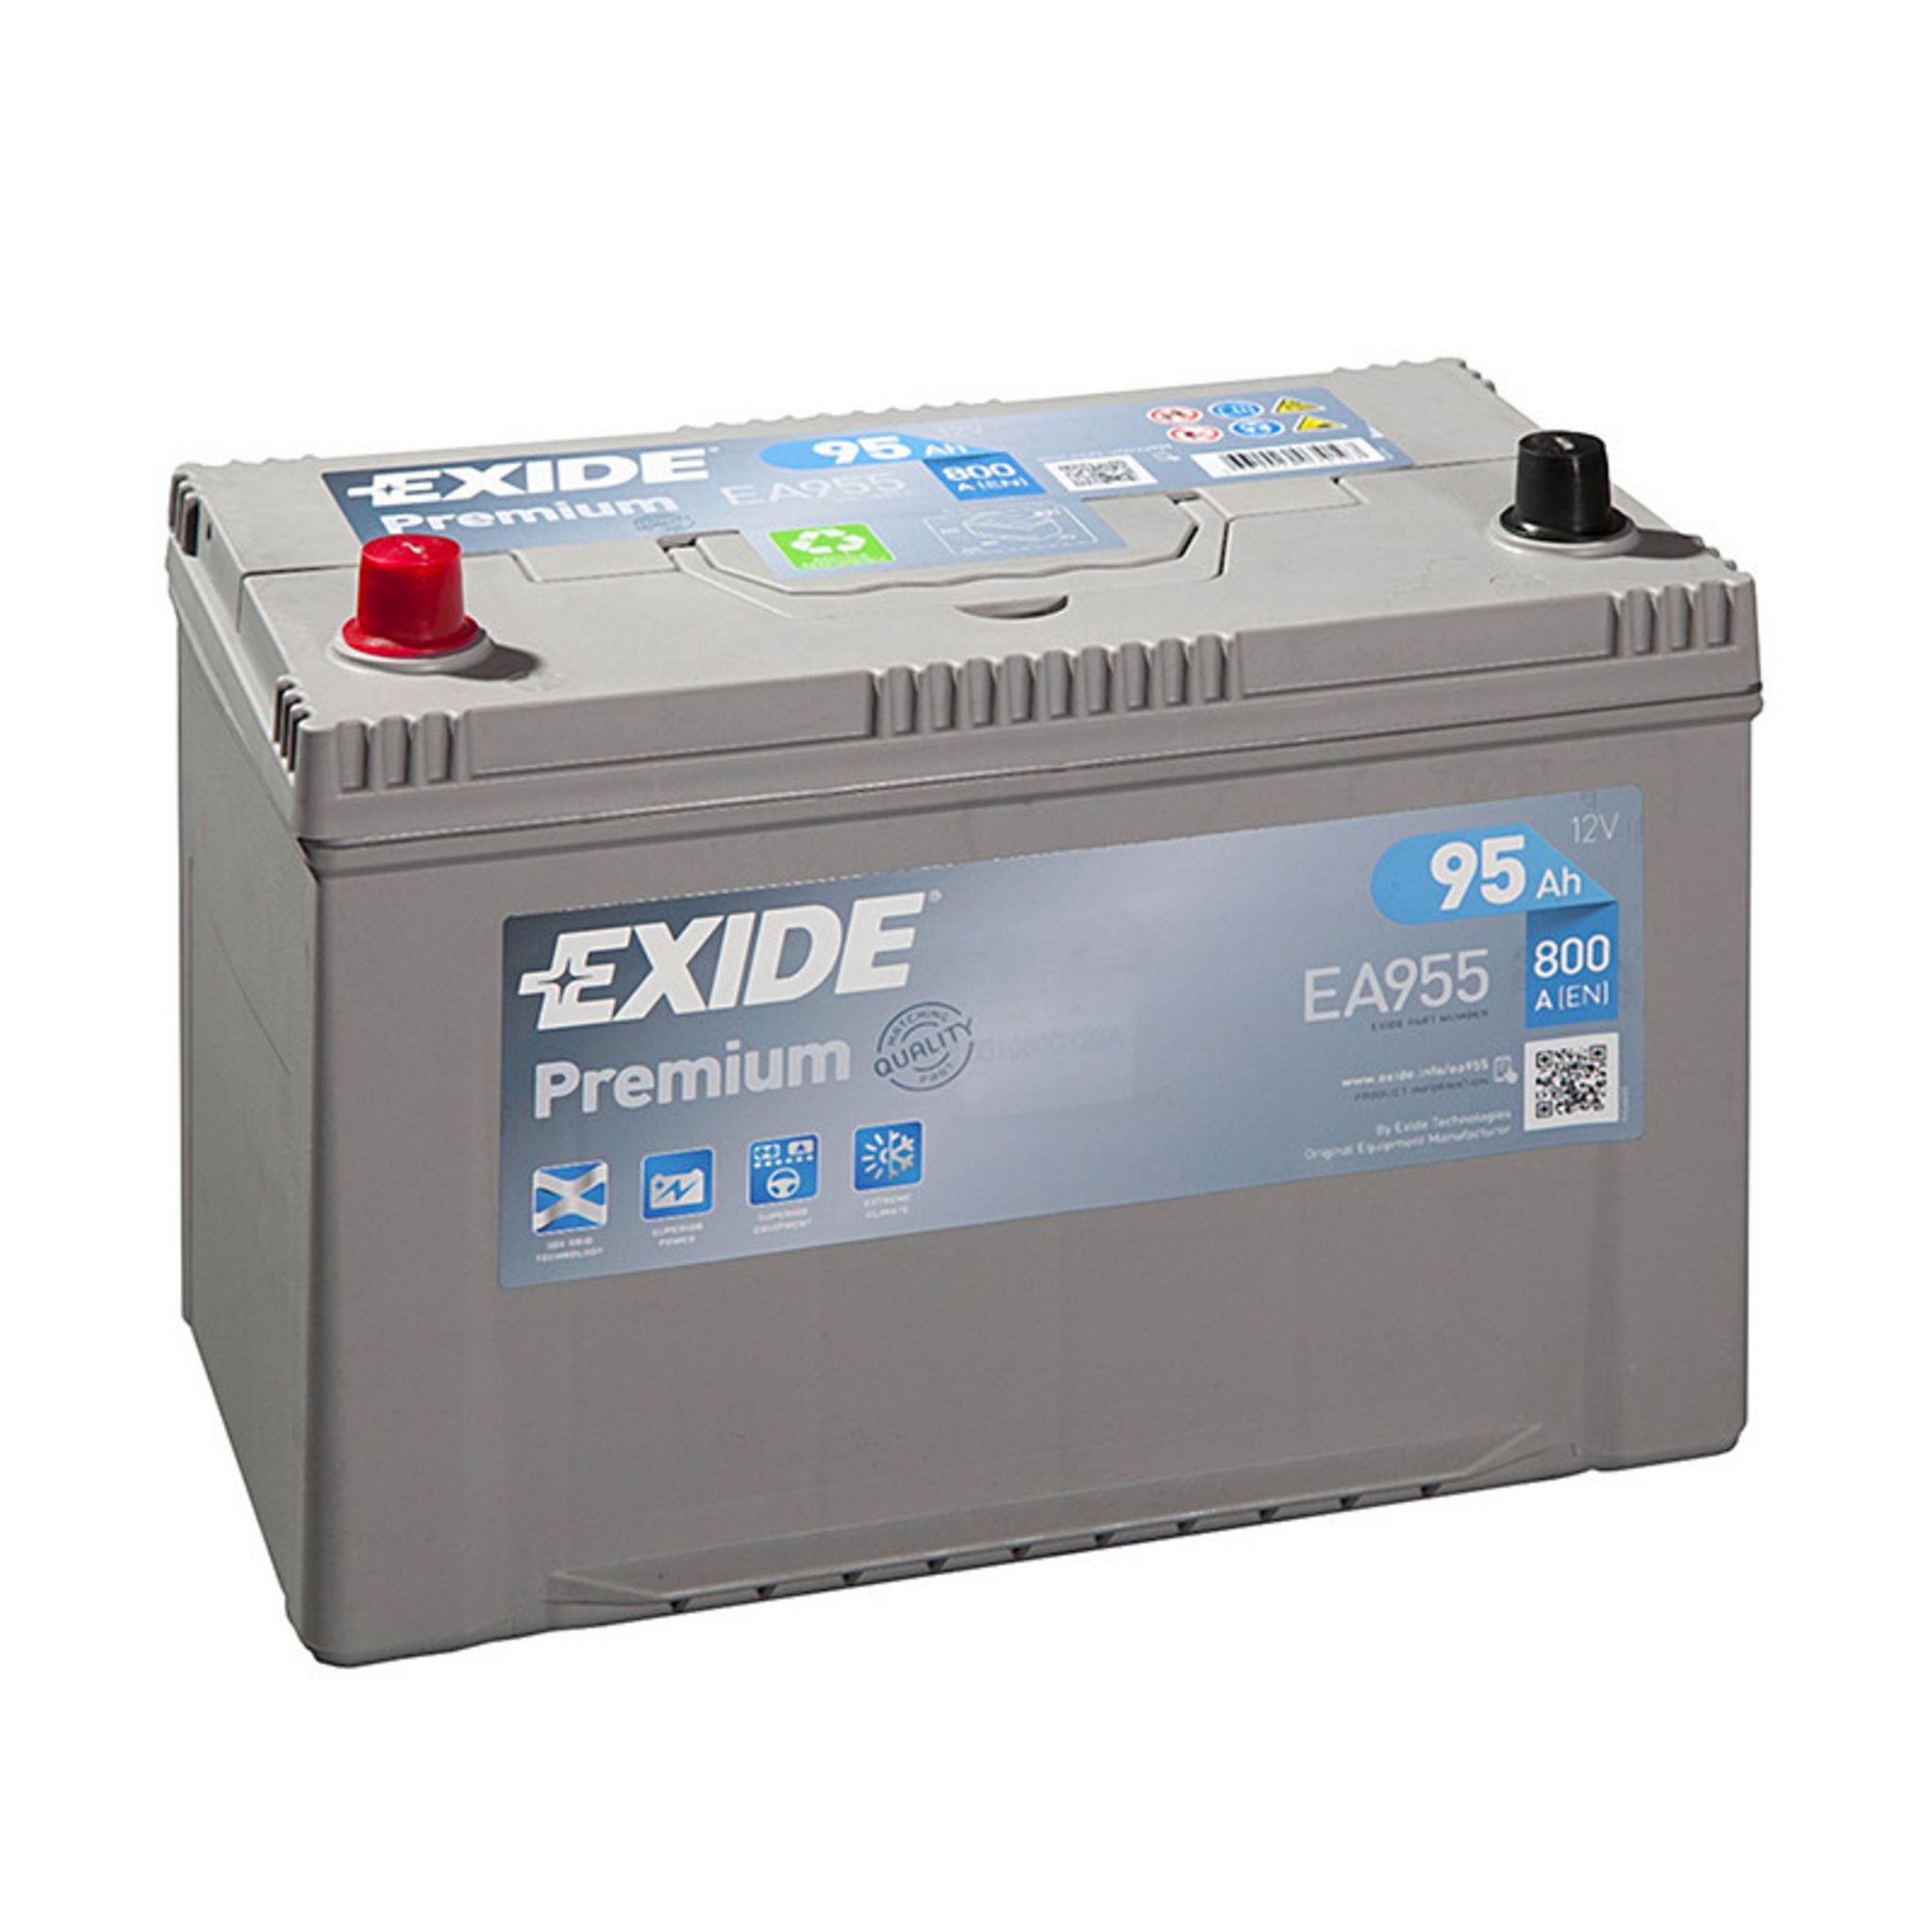 EXIDE Batterie Exide Premium EA955 12v 95AH 800A FA955 pas cher 